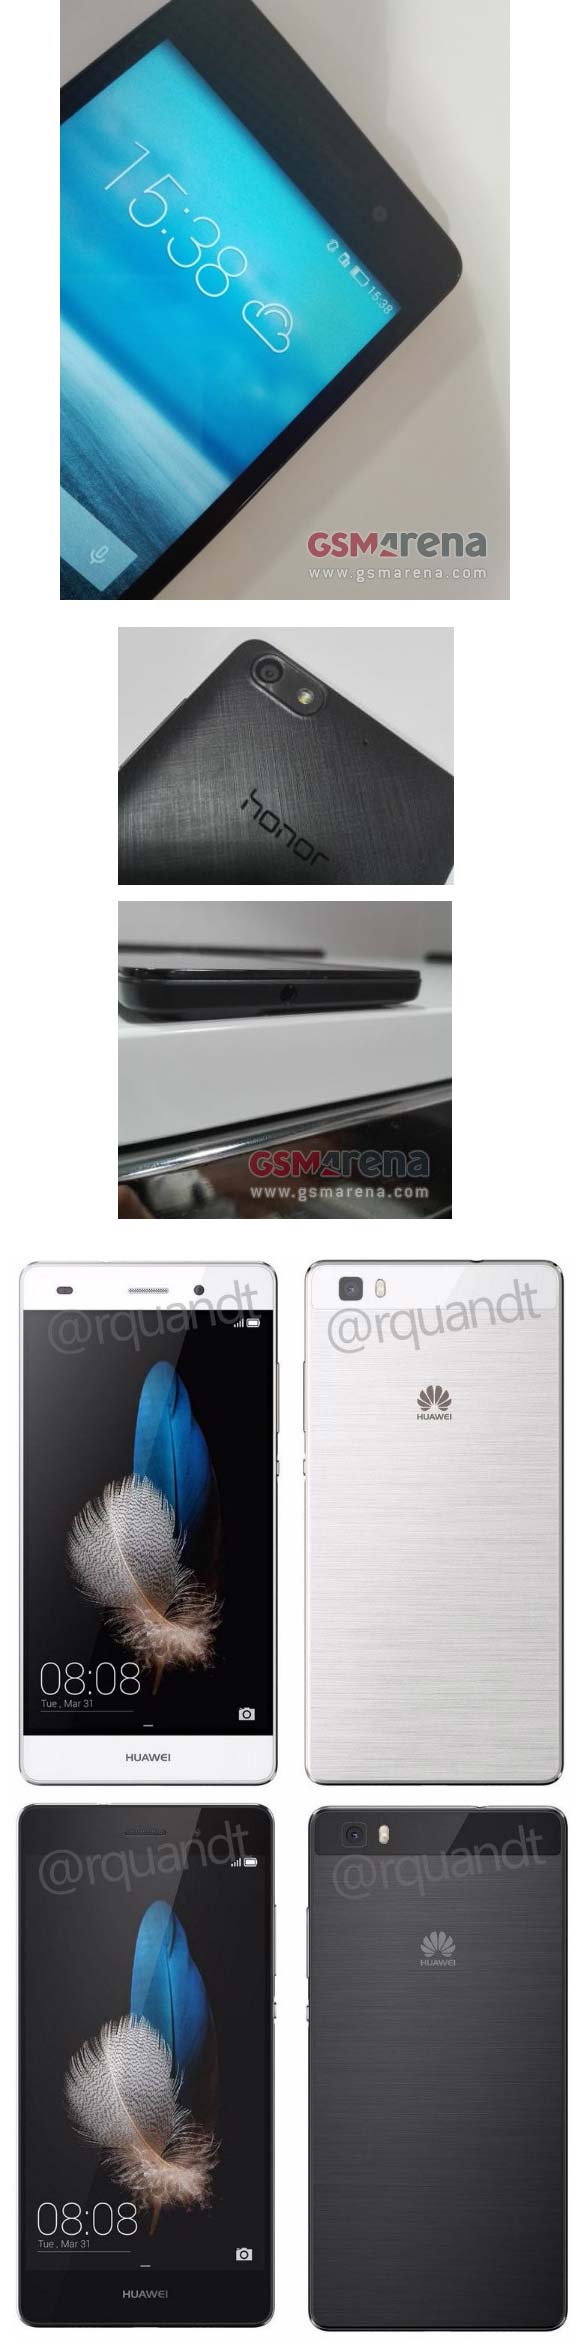 На фото показаны Huawei Honor Cherry и P8 Lite